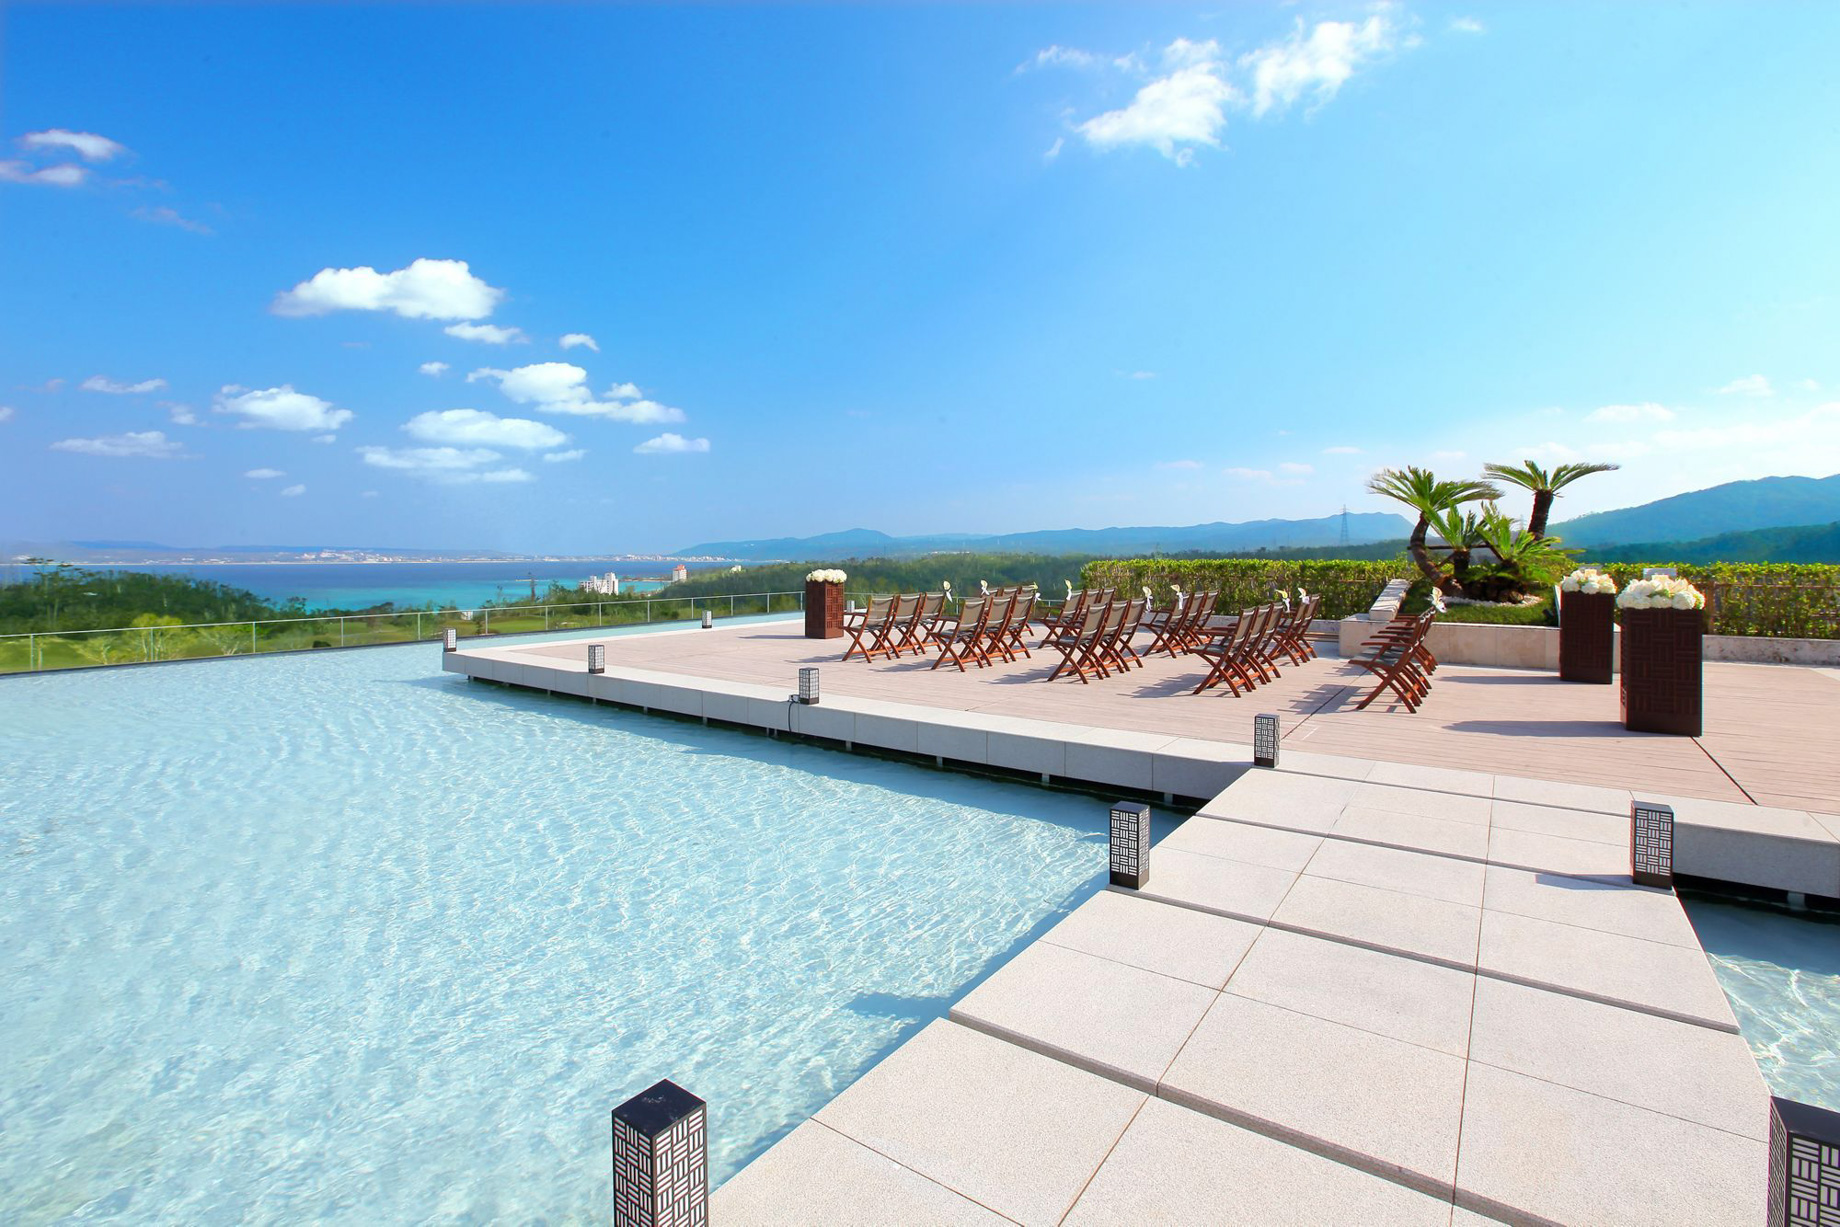 The Ritz-Carlton, Okinawa Hotel – Okinawa, Japan – Exterior Pool Deck